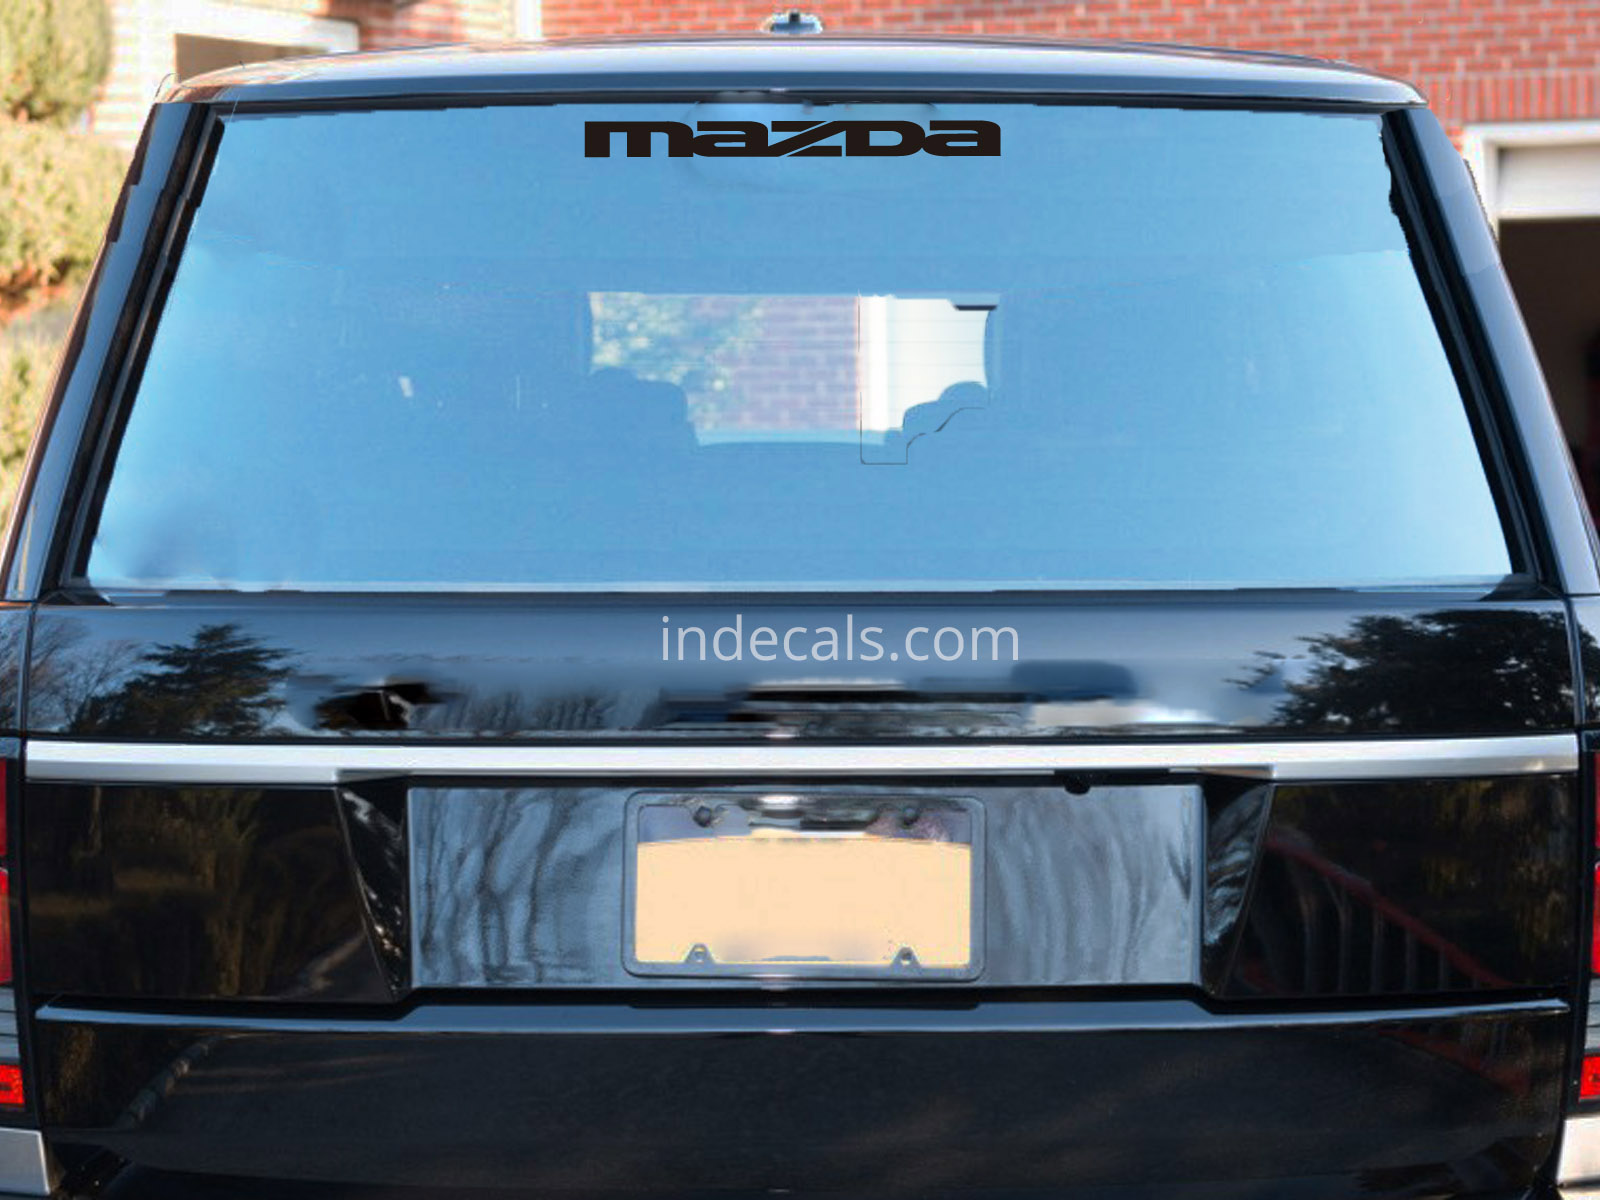 1 x Mazda Sticker for Windshield or Back Window - Black